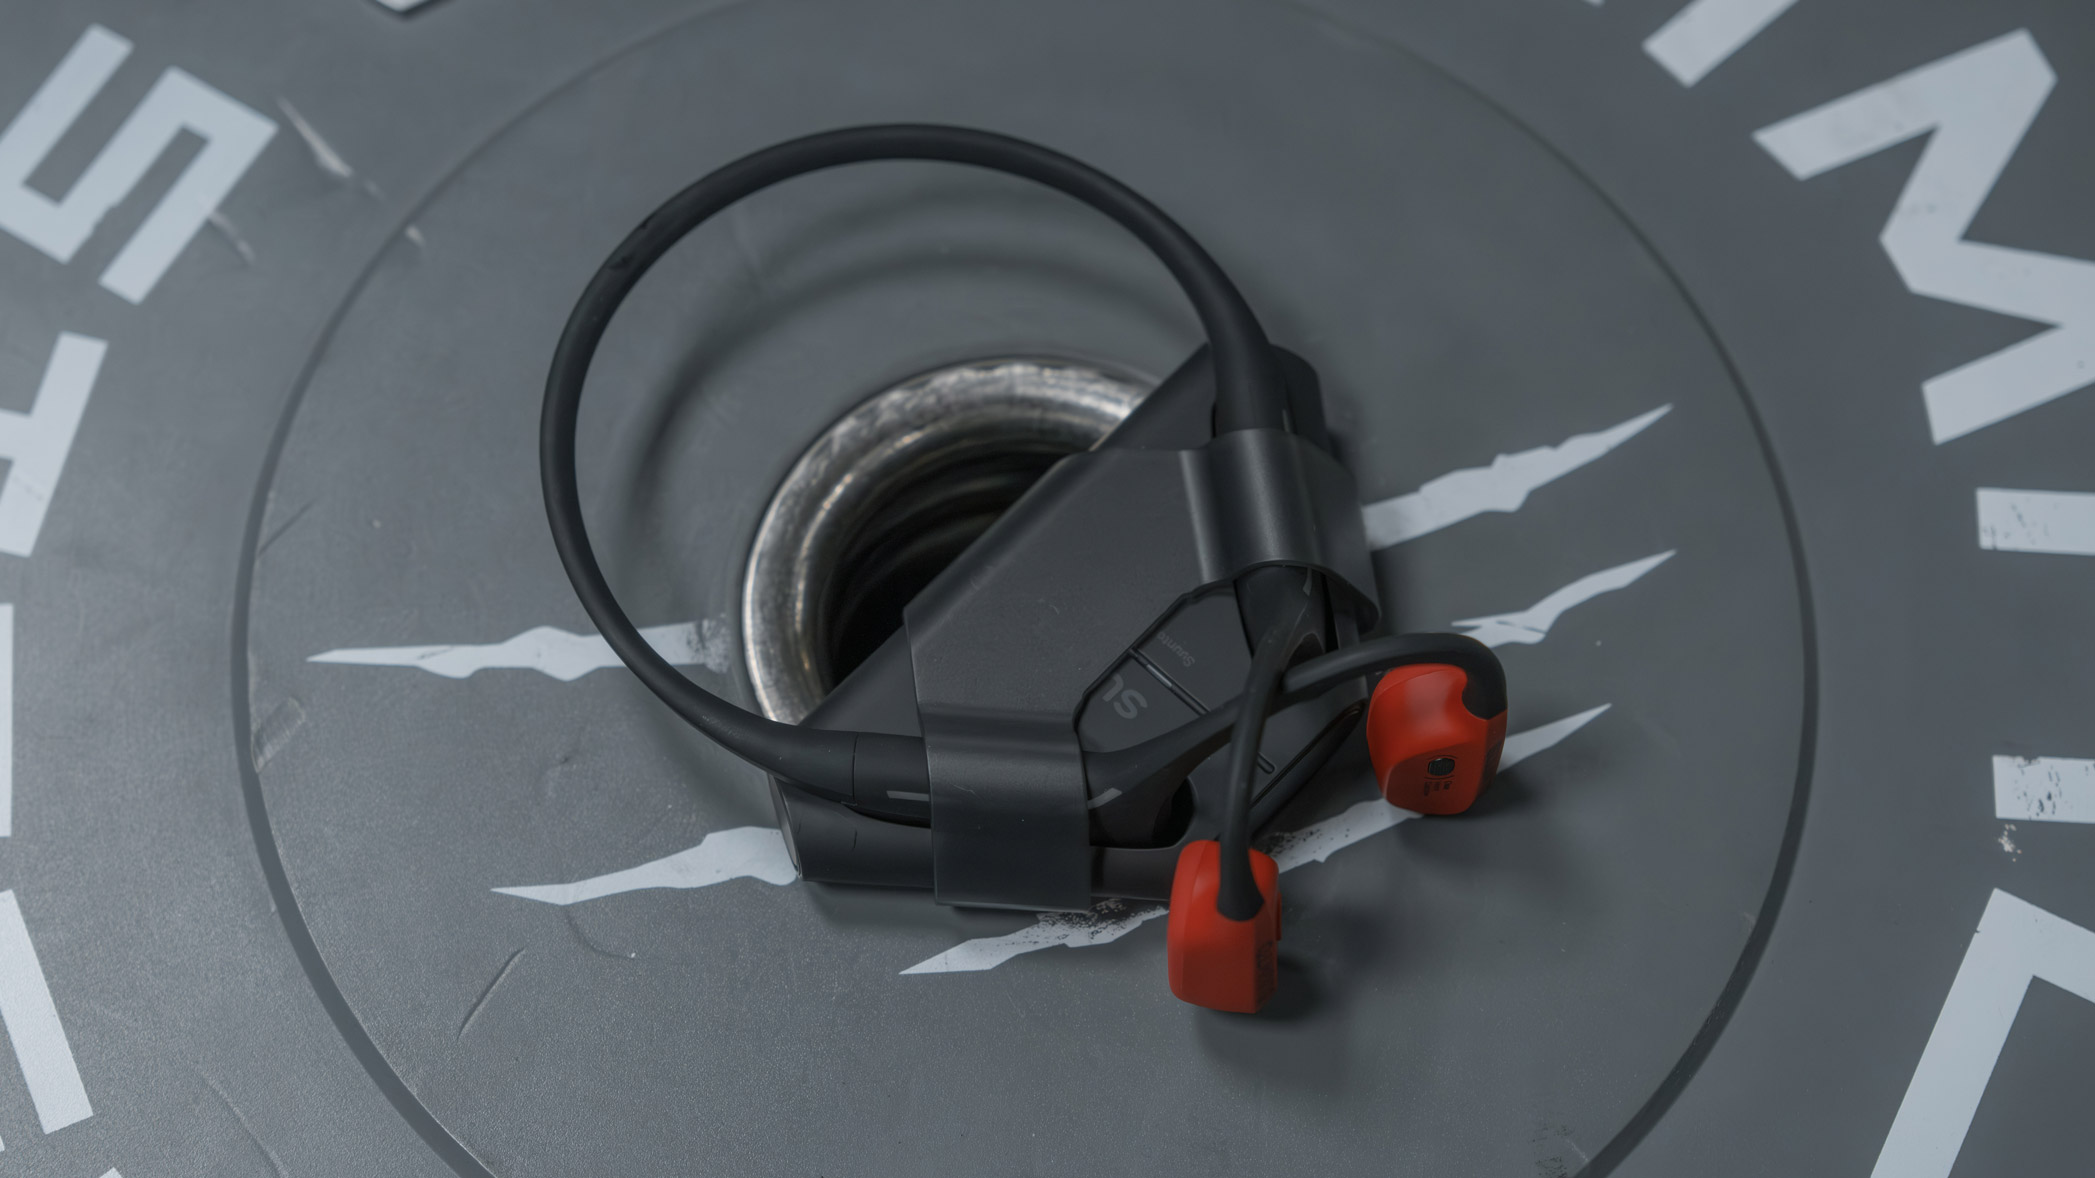 Suunto Wing bone conduction headphones